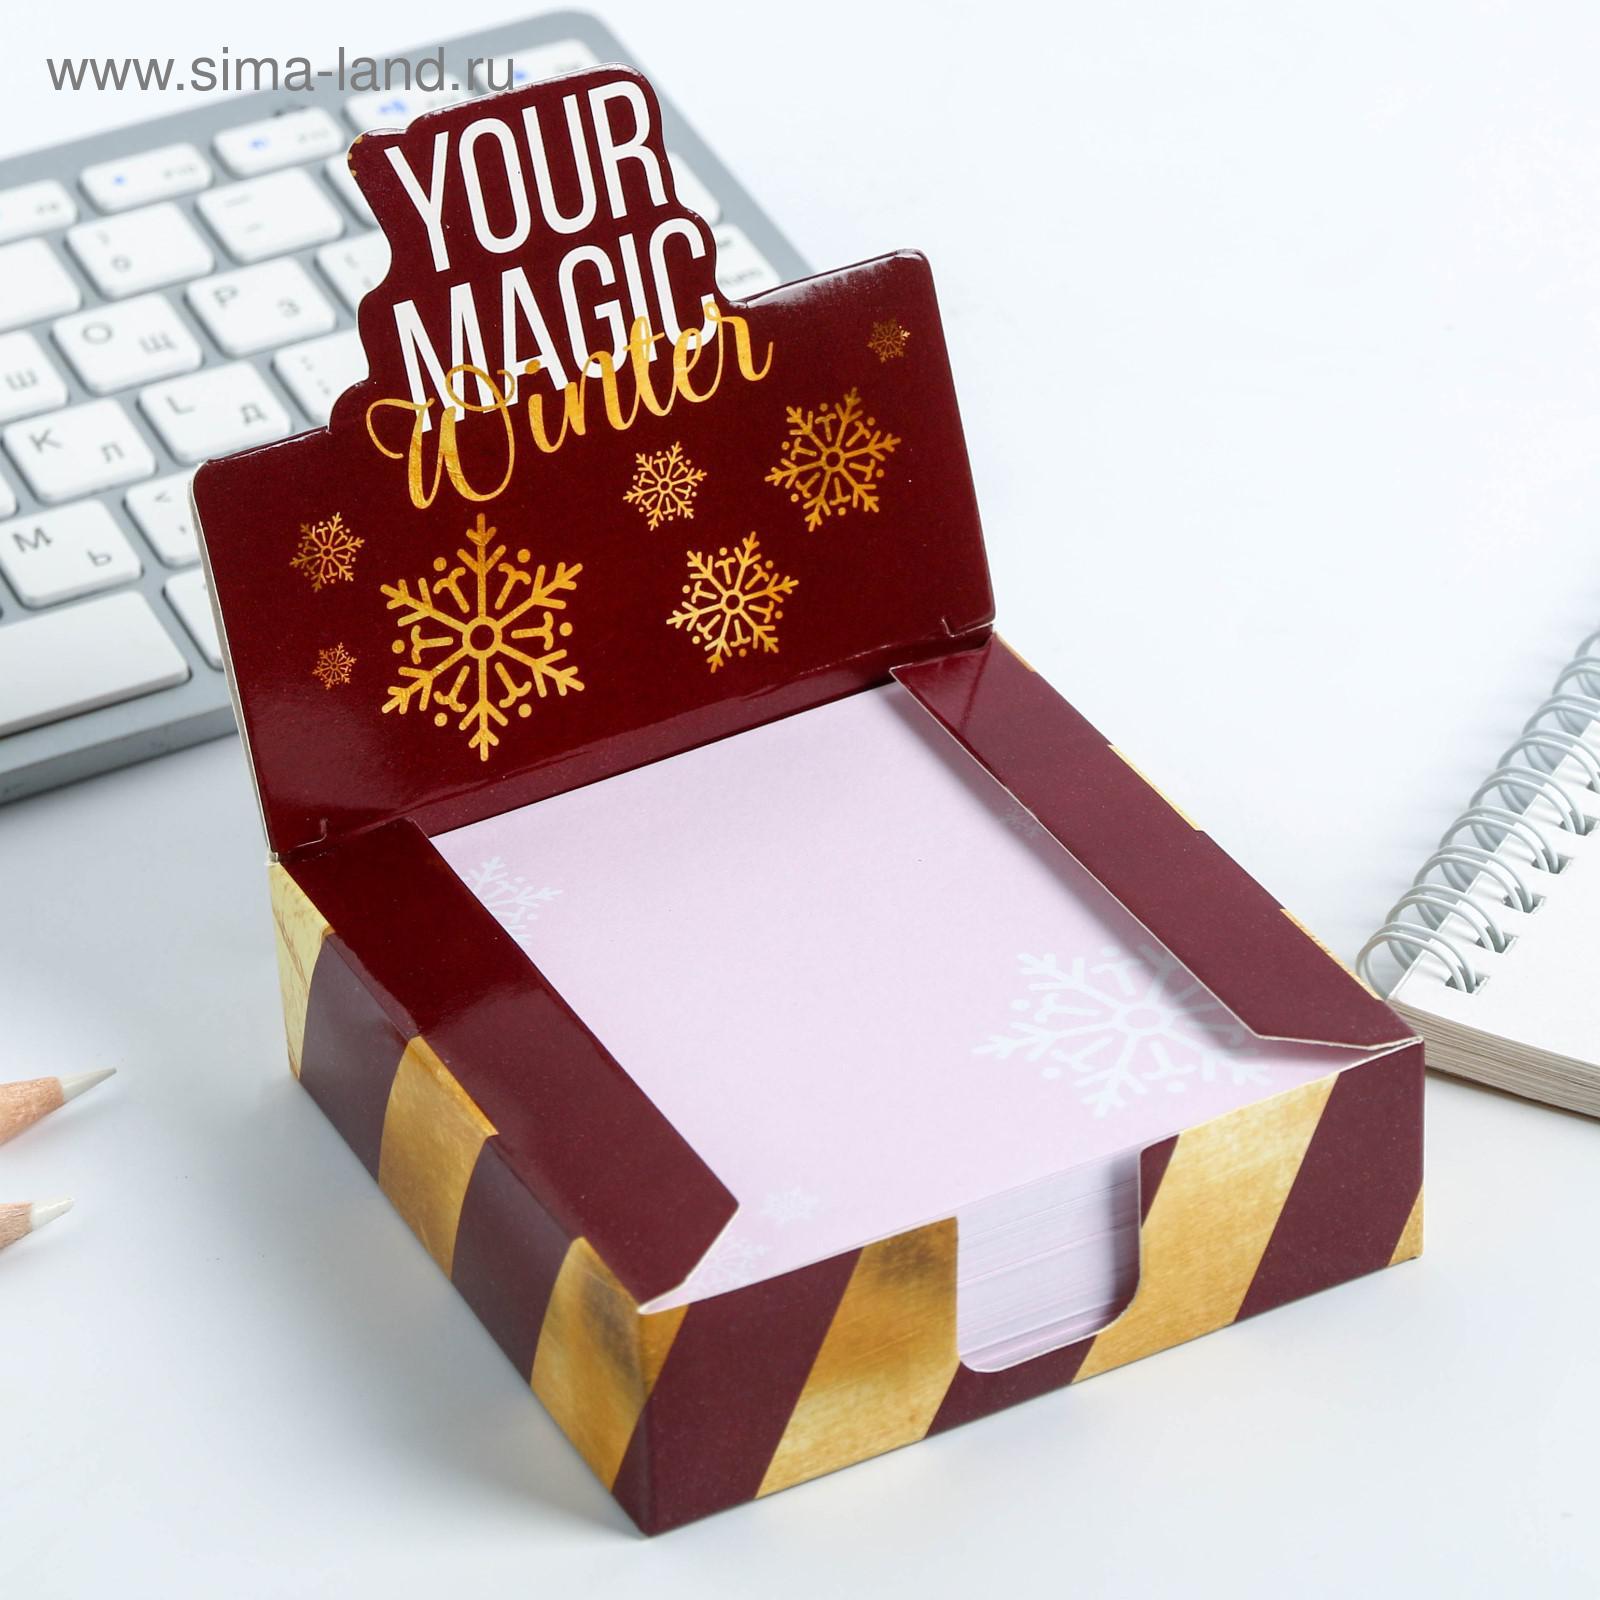 Бумага для записей в коробке Your magic winter: 250 листов 9 х 9 см арт .